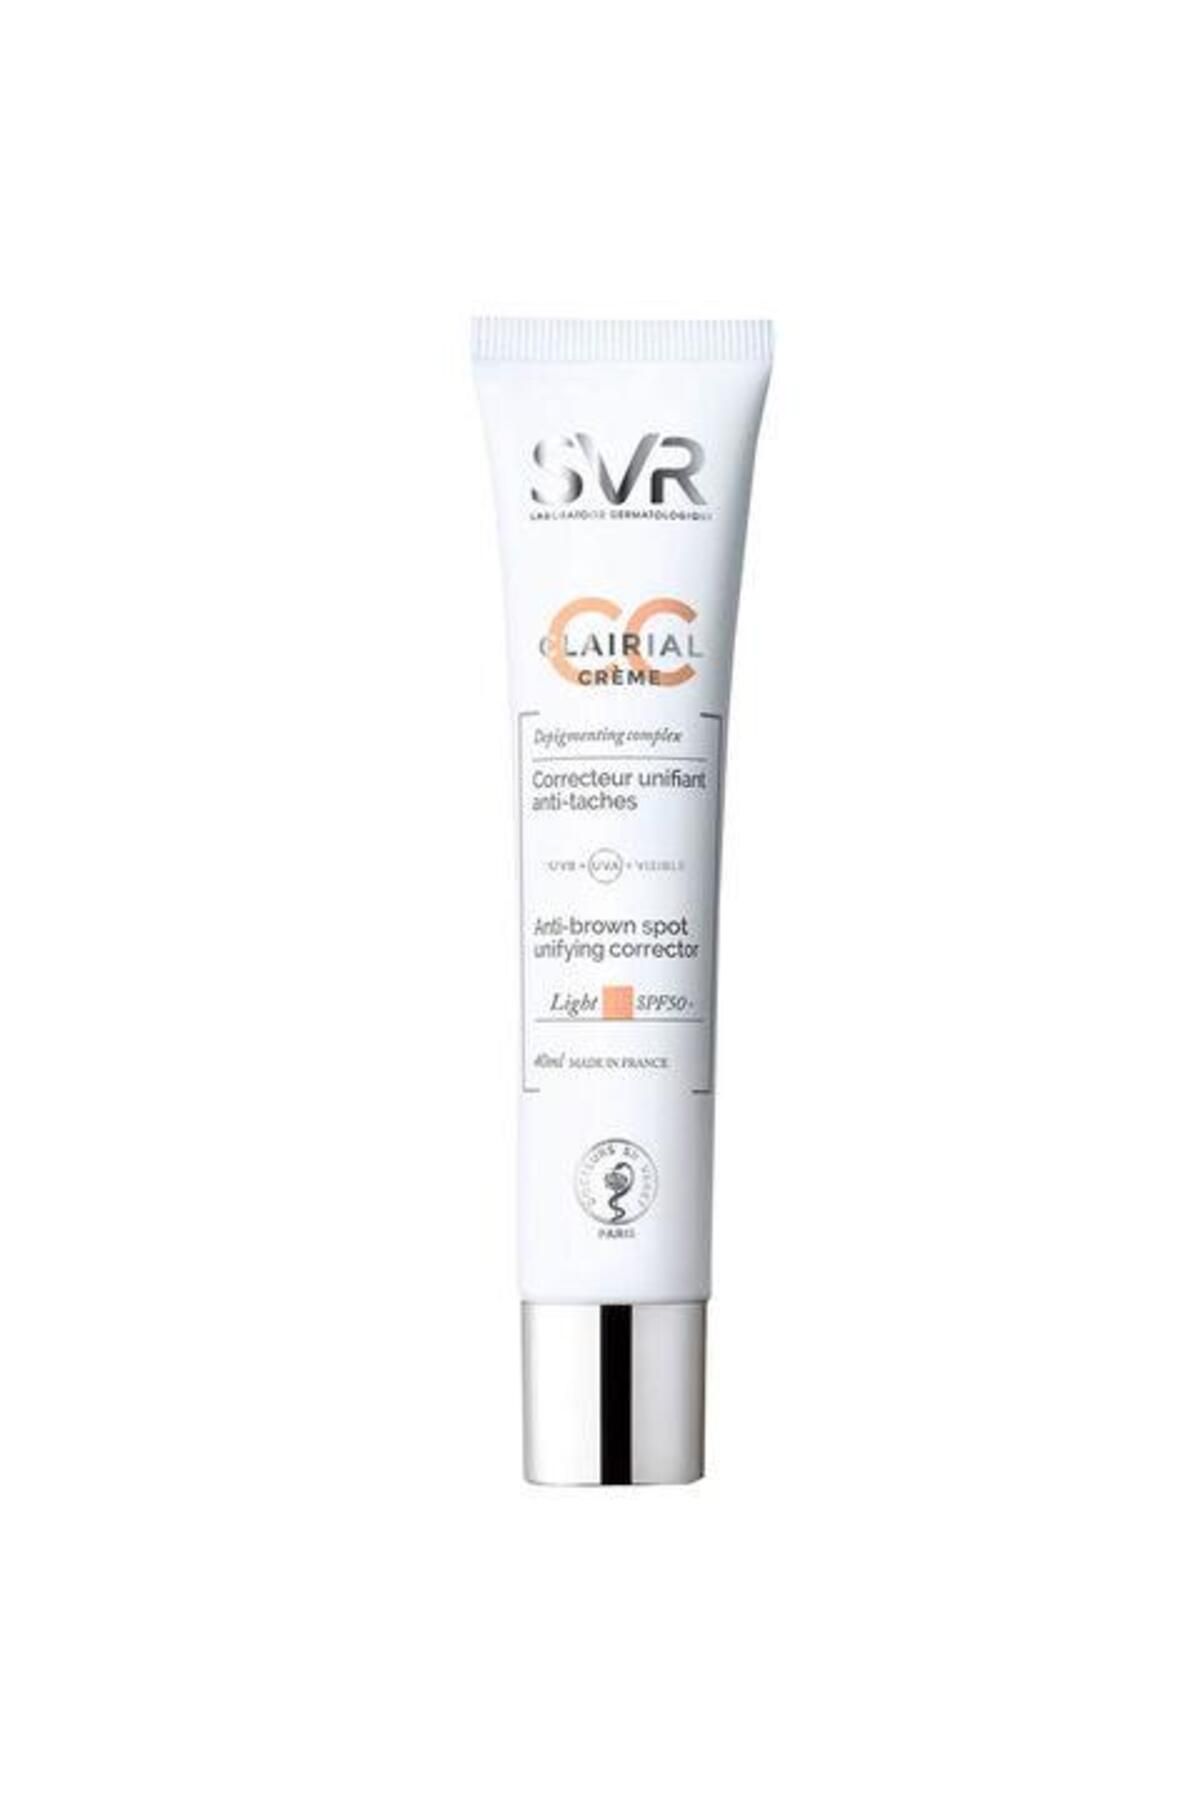 SVR Clairial Cc Cream Light Spf50 40 ml